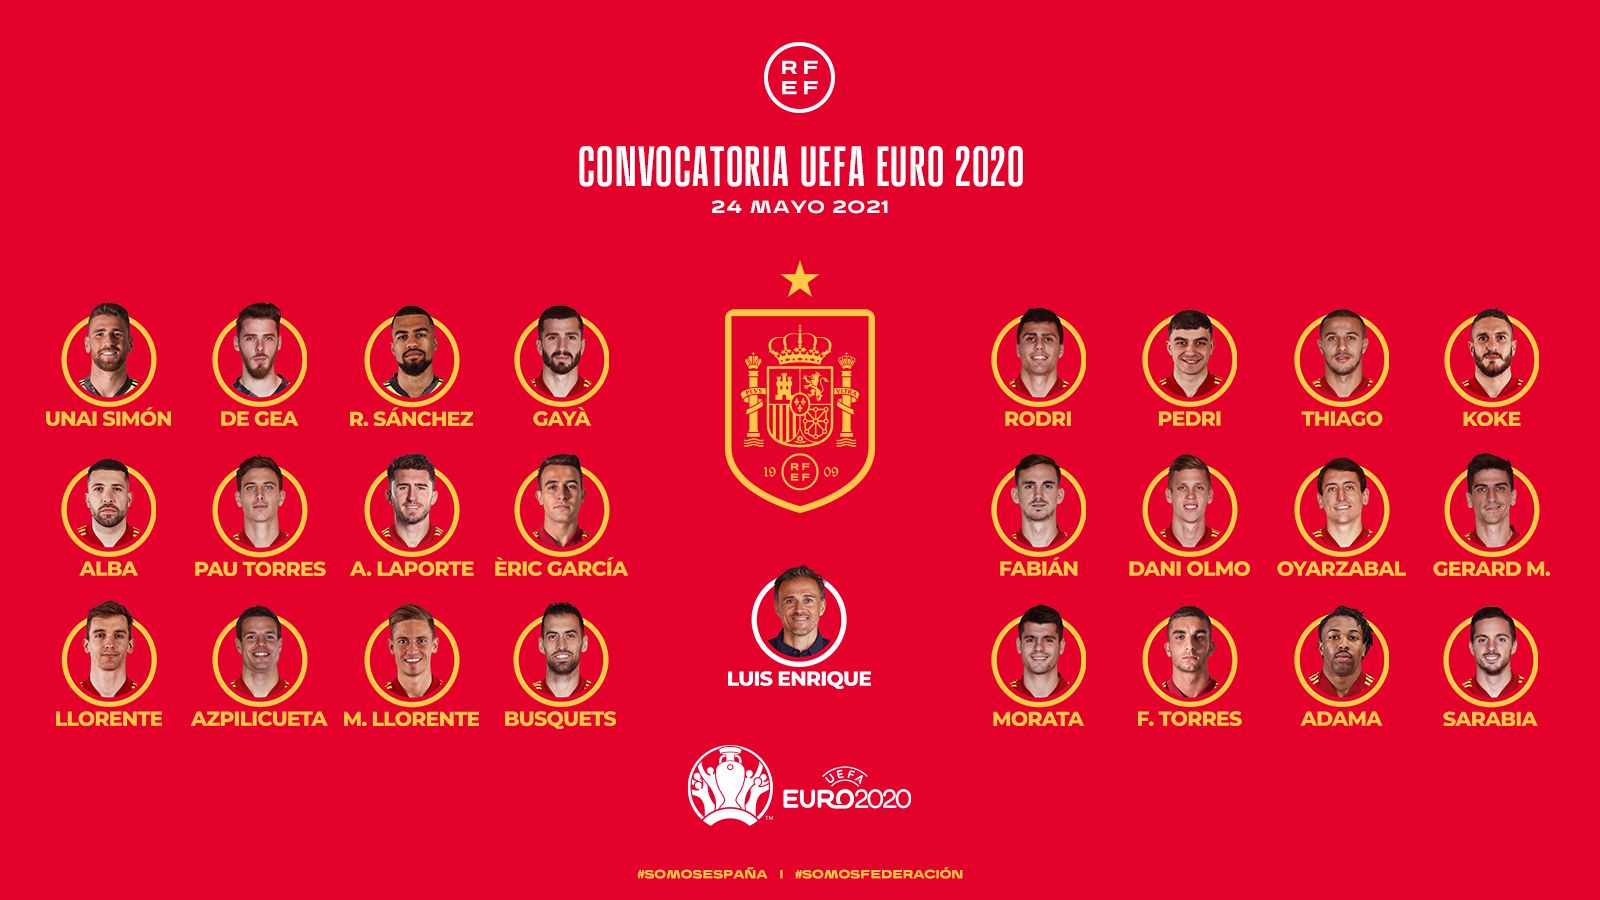 Серхио Рамос не попал в заявку сборной Испании на Евро-2020